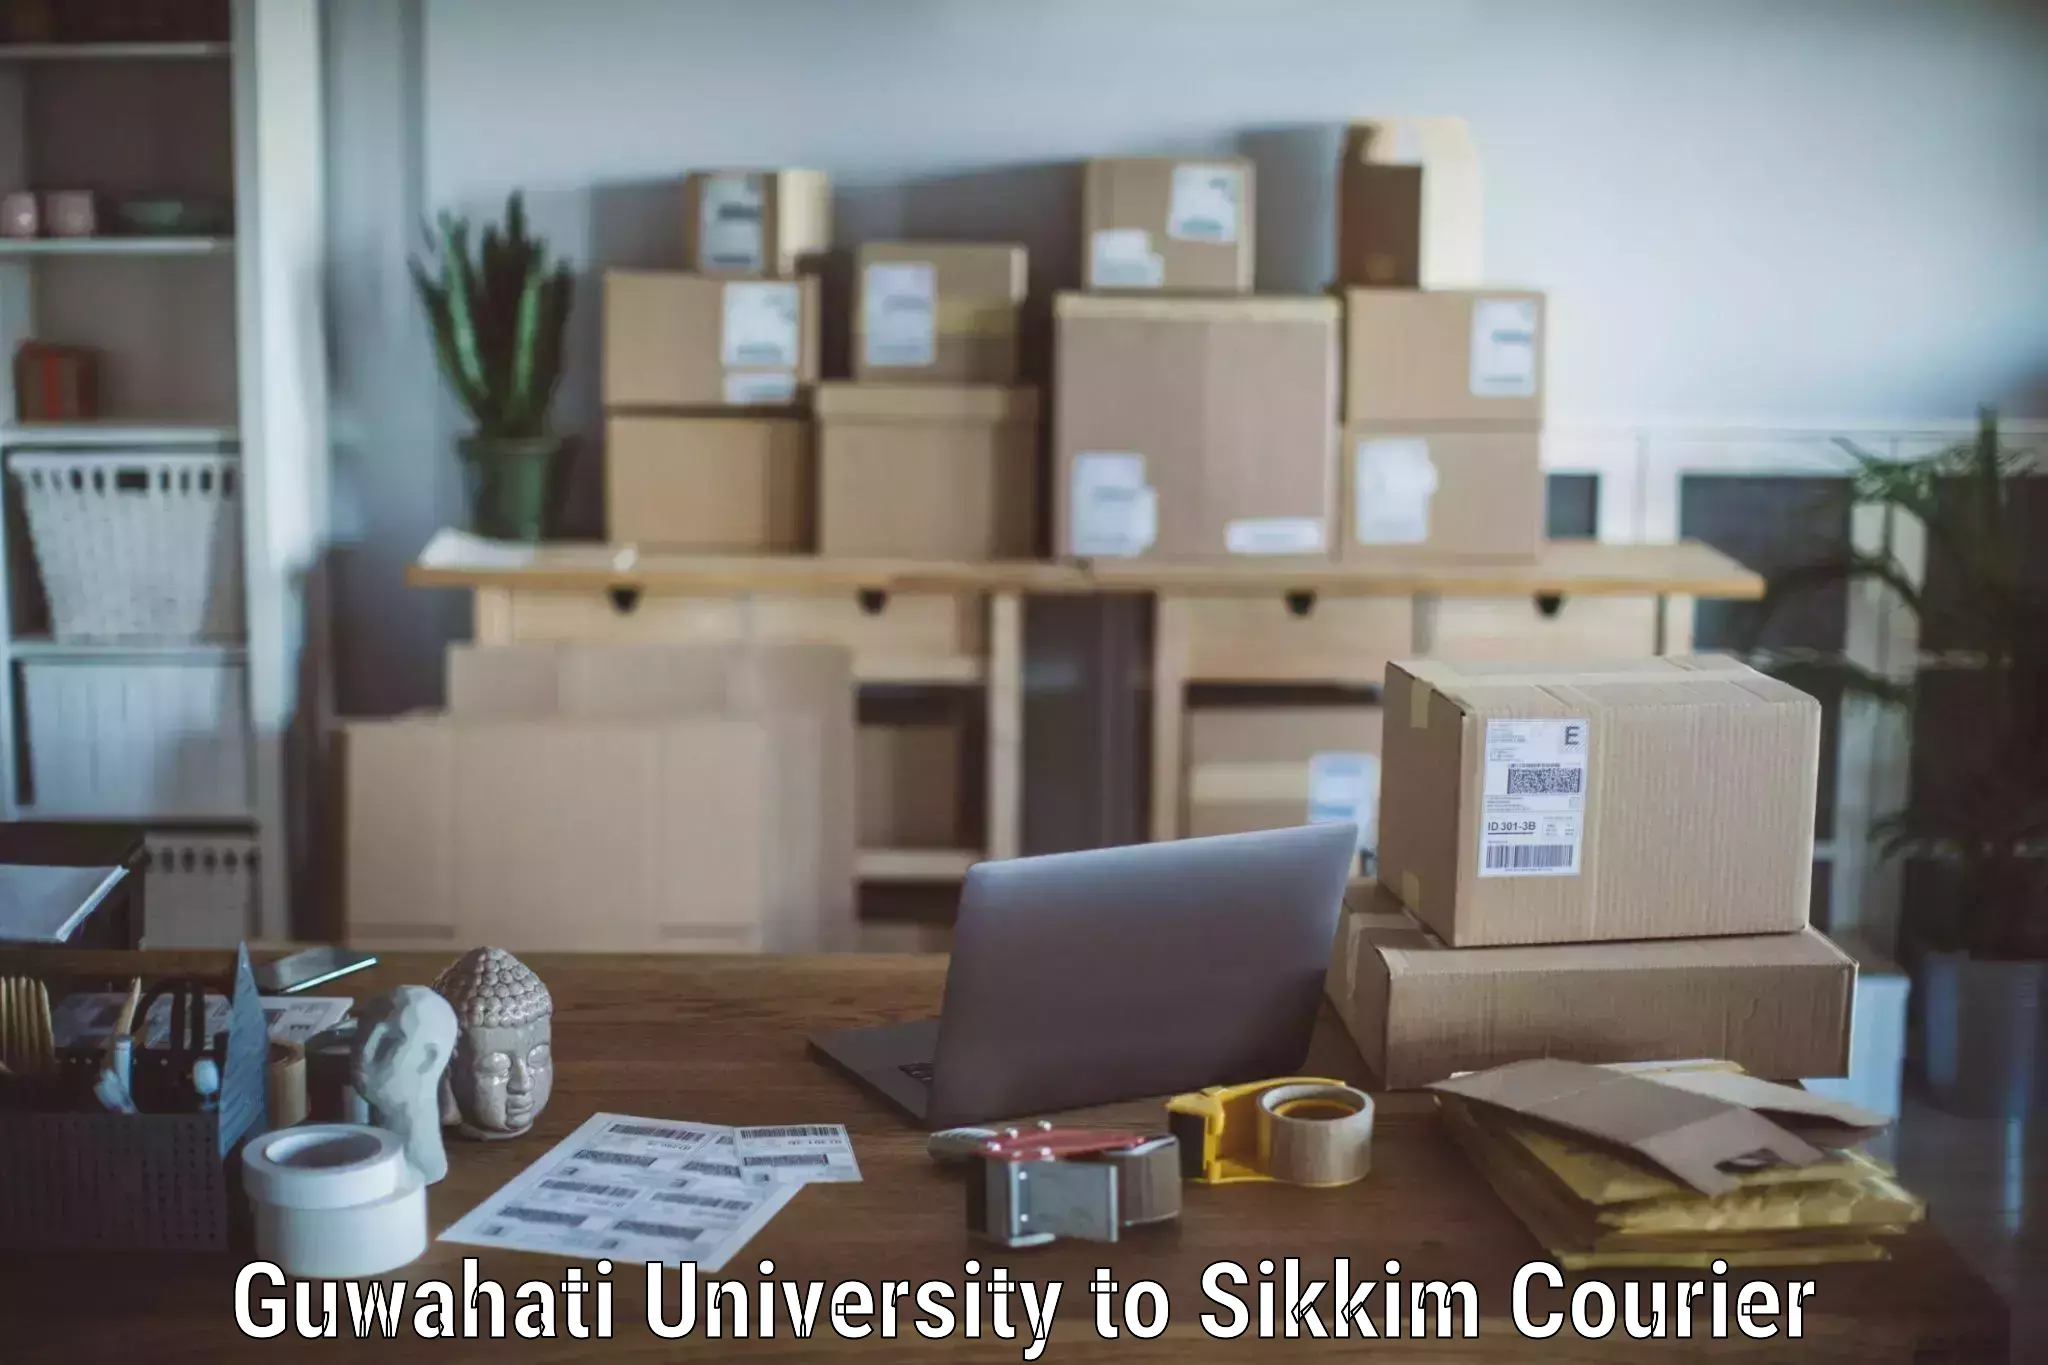 Efficient moving company Guwahati University to Gangtok